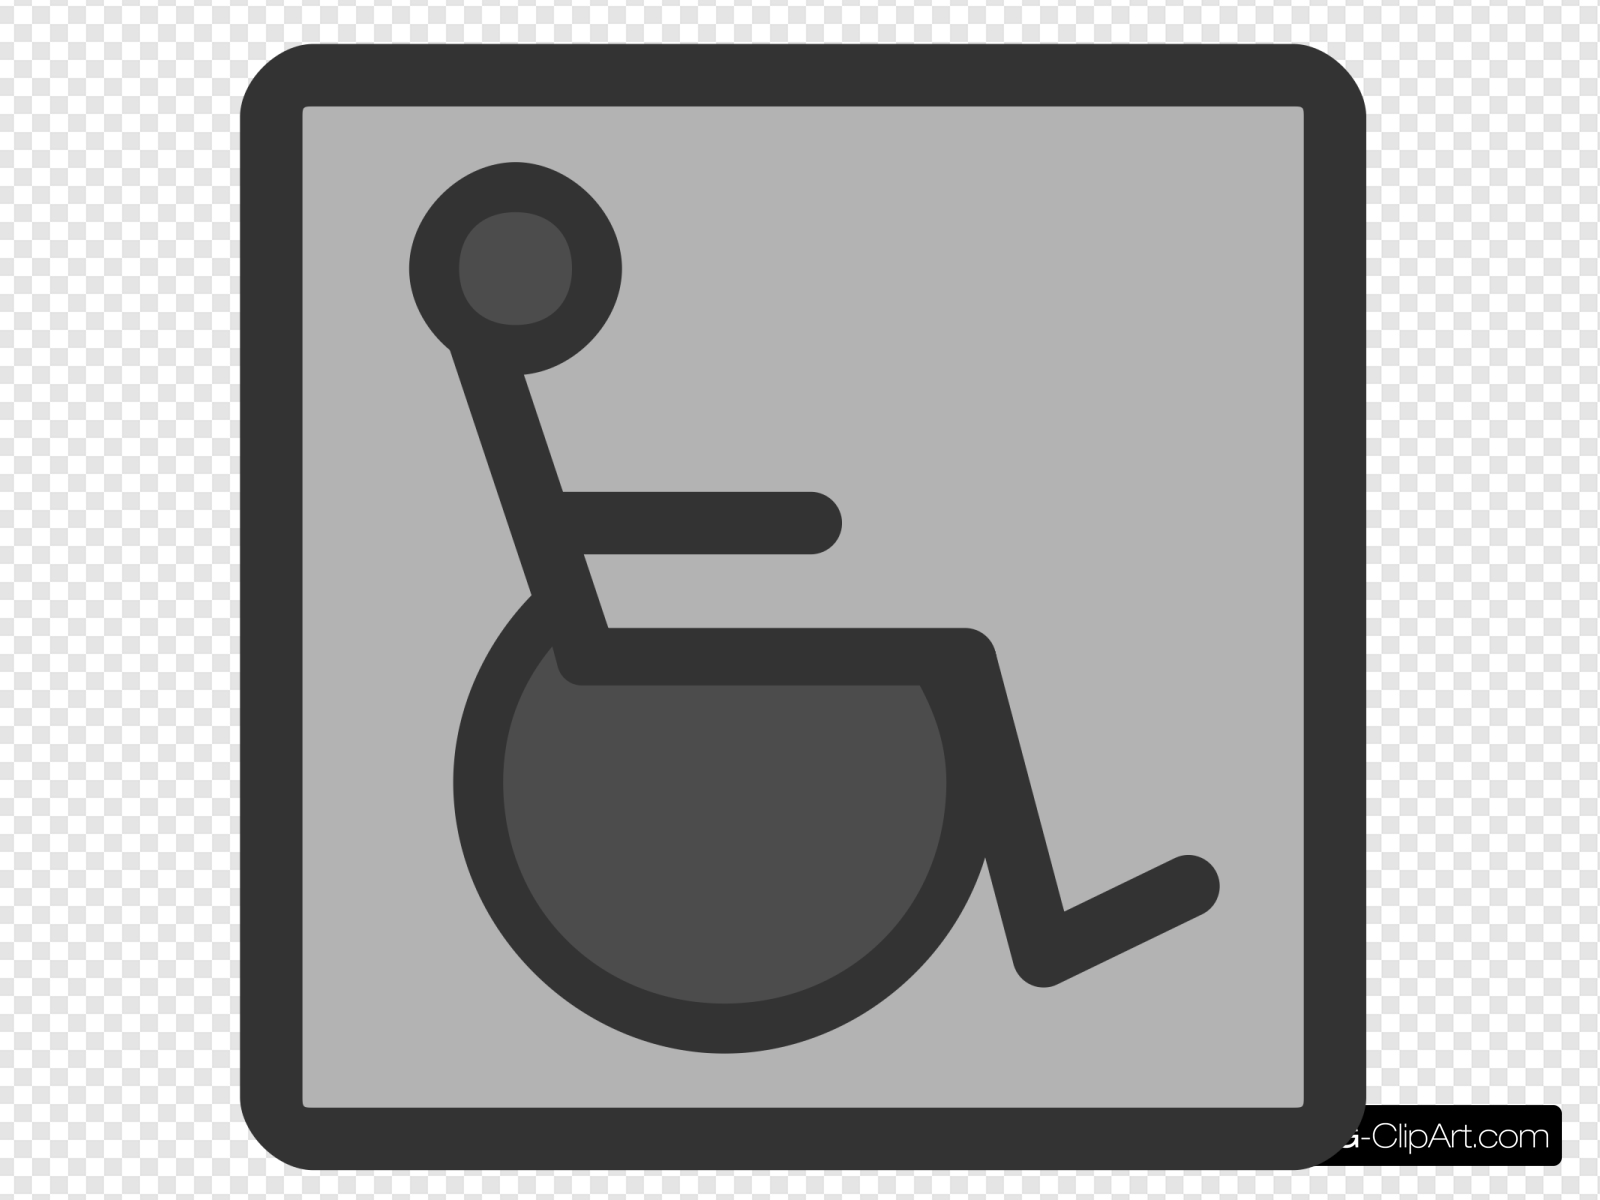 Handicap Accessibility Clip art, Icon and SVG.